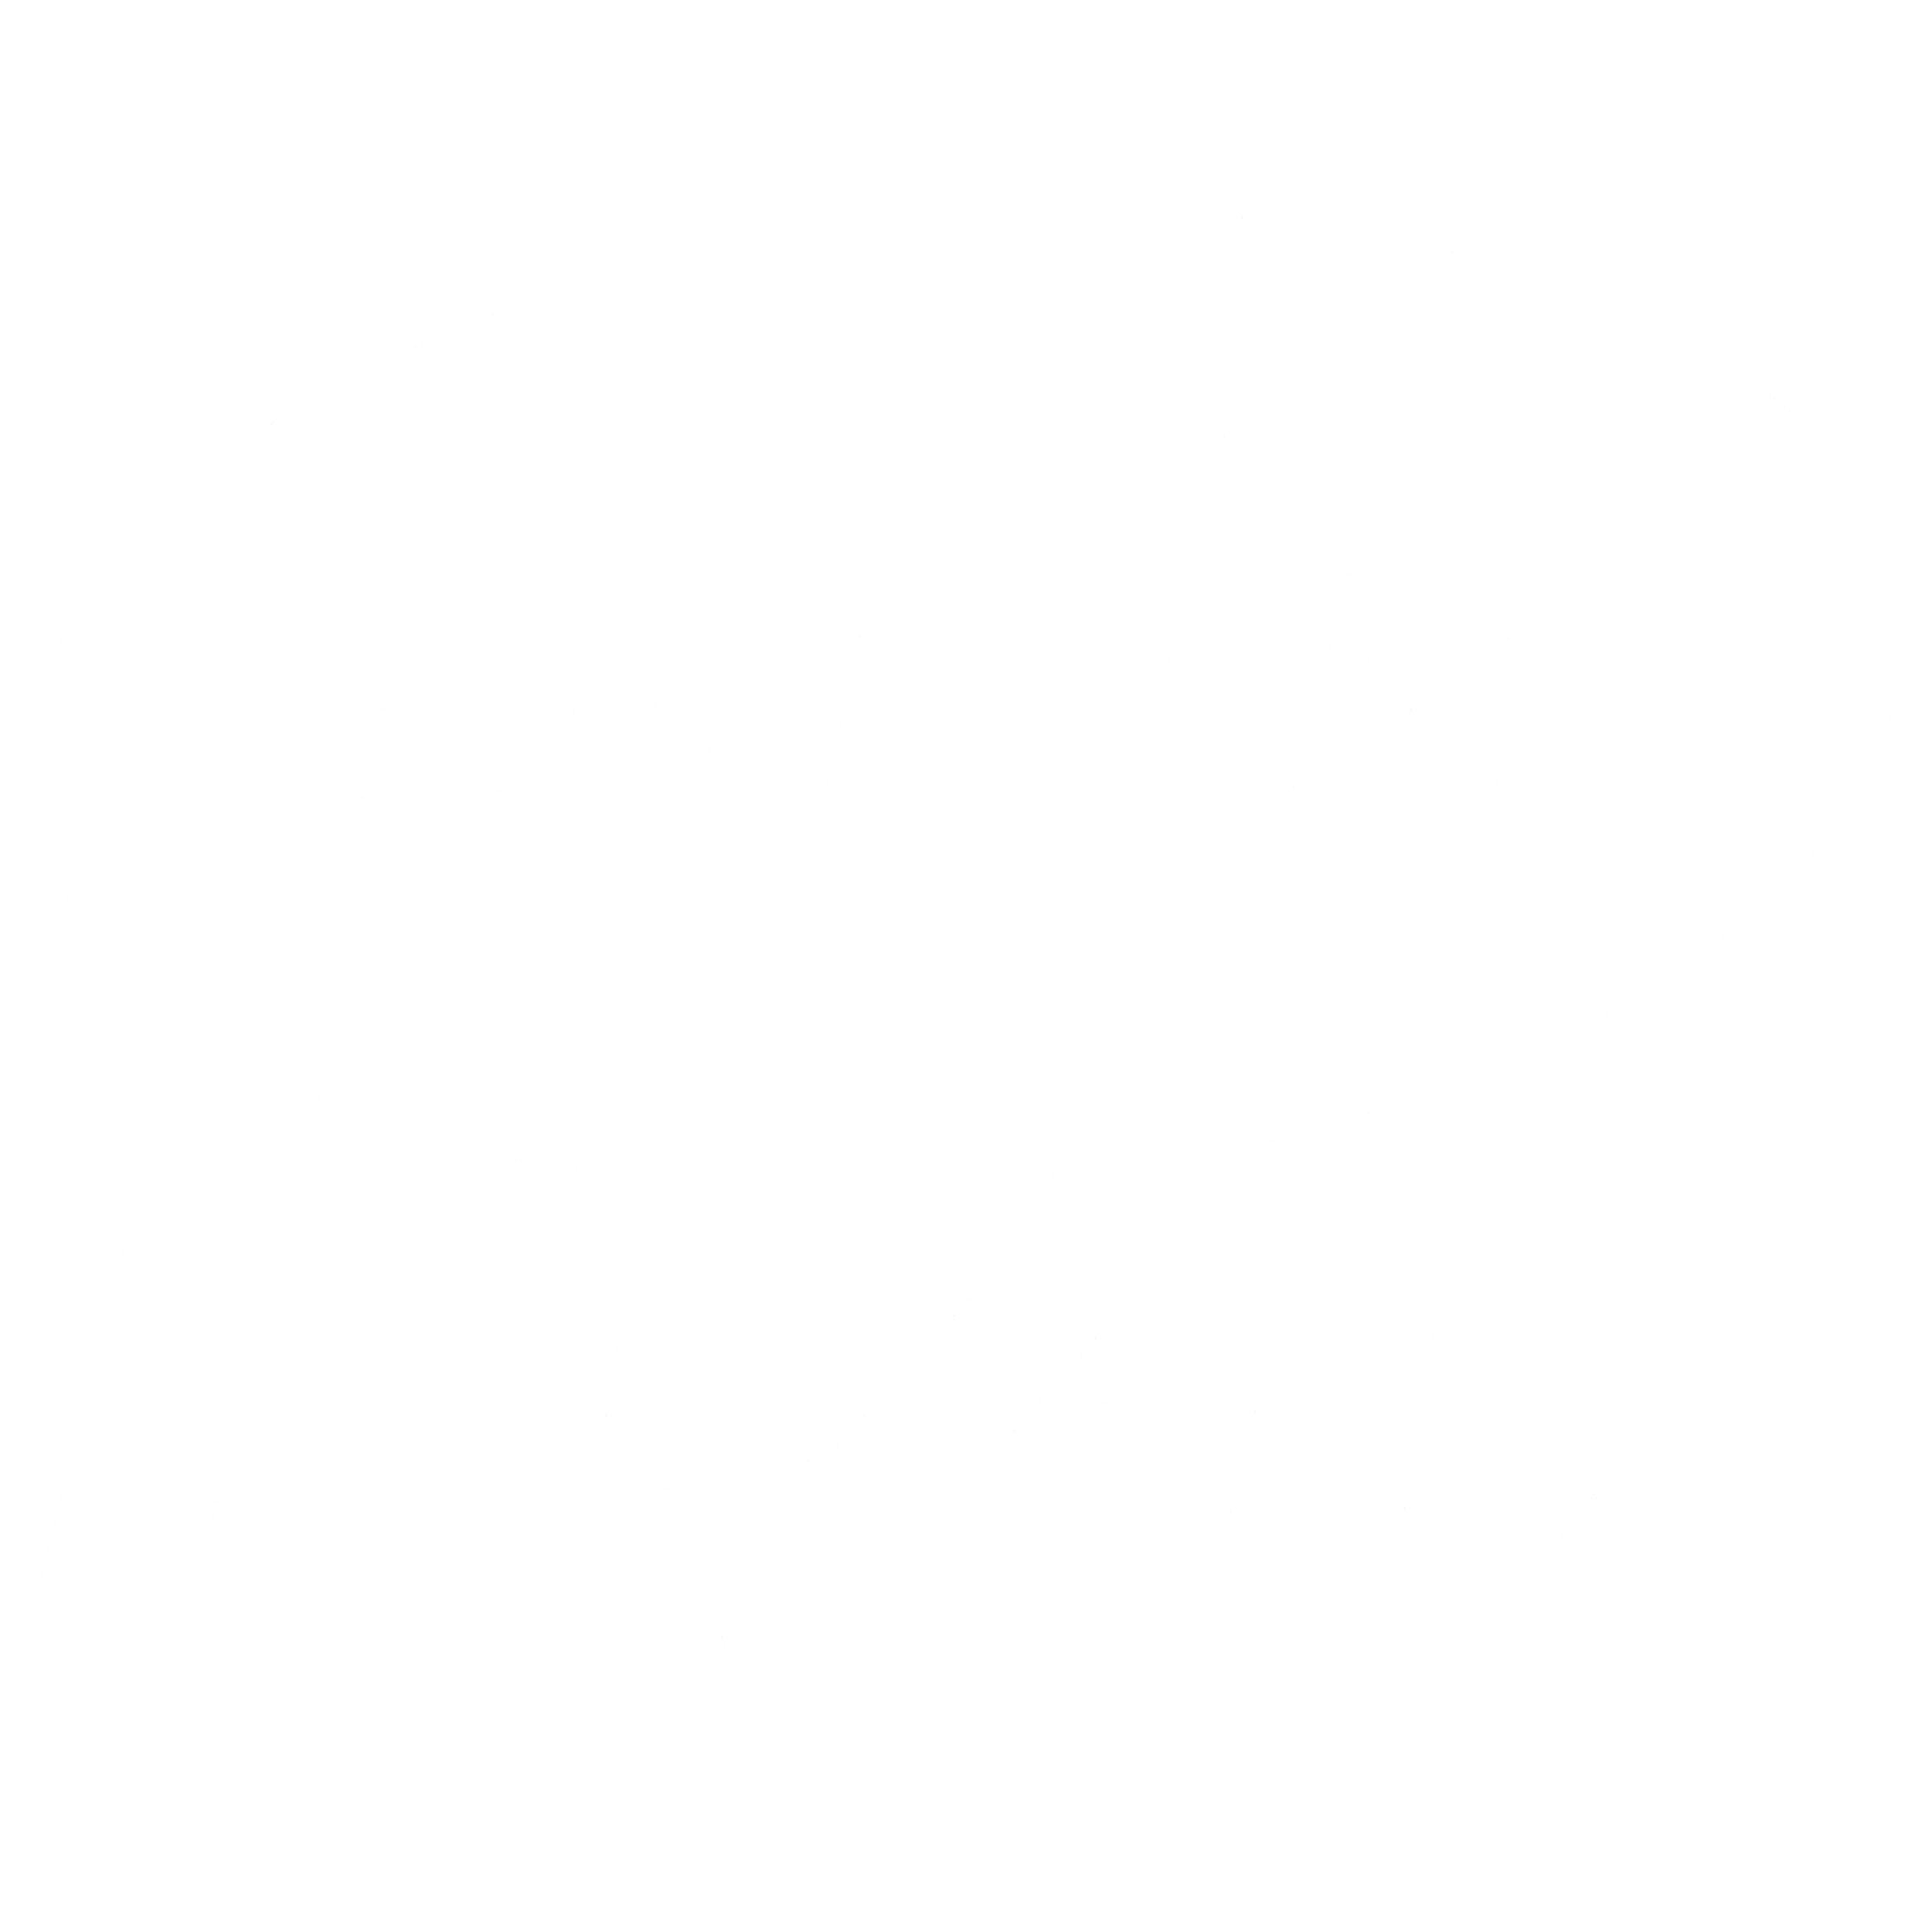 No 1 in DVD Logo PNG Transparent & SVG Vector.